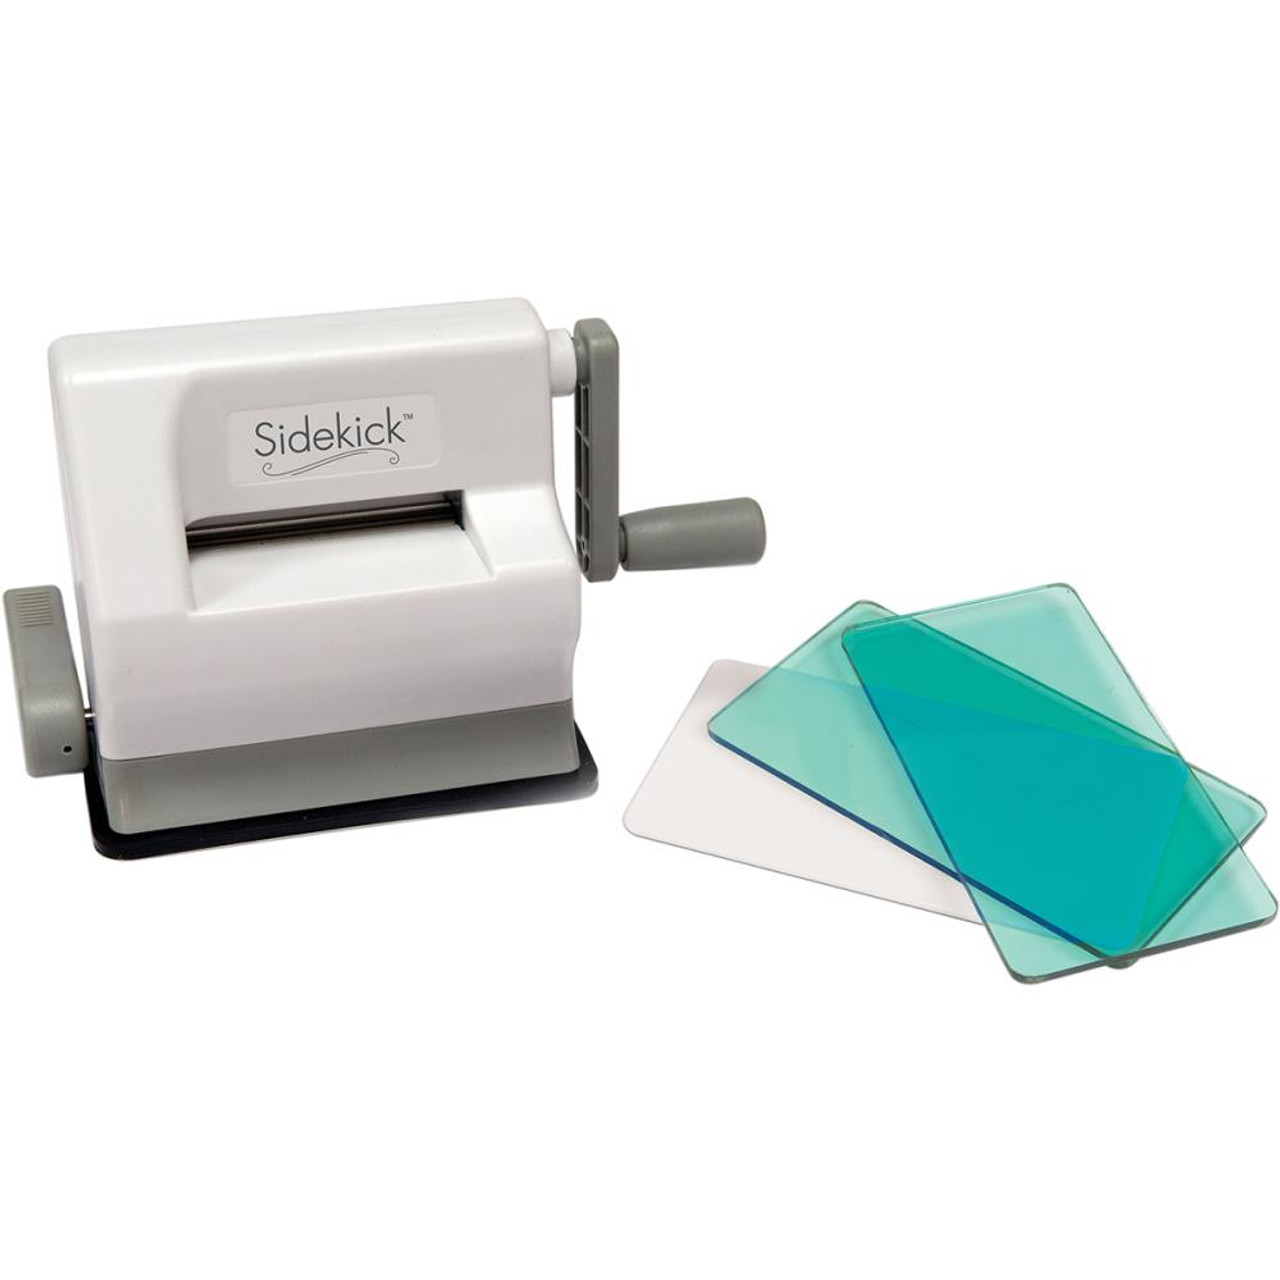 Sizzix - Big Shot Switch Plus - Accessory - Cutting Pads - 2 Pair, 4 Plates  - Standard